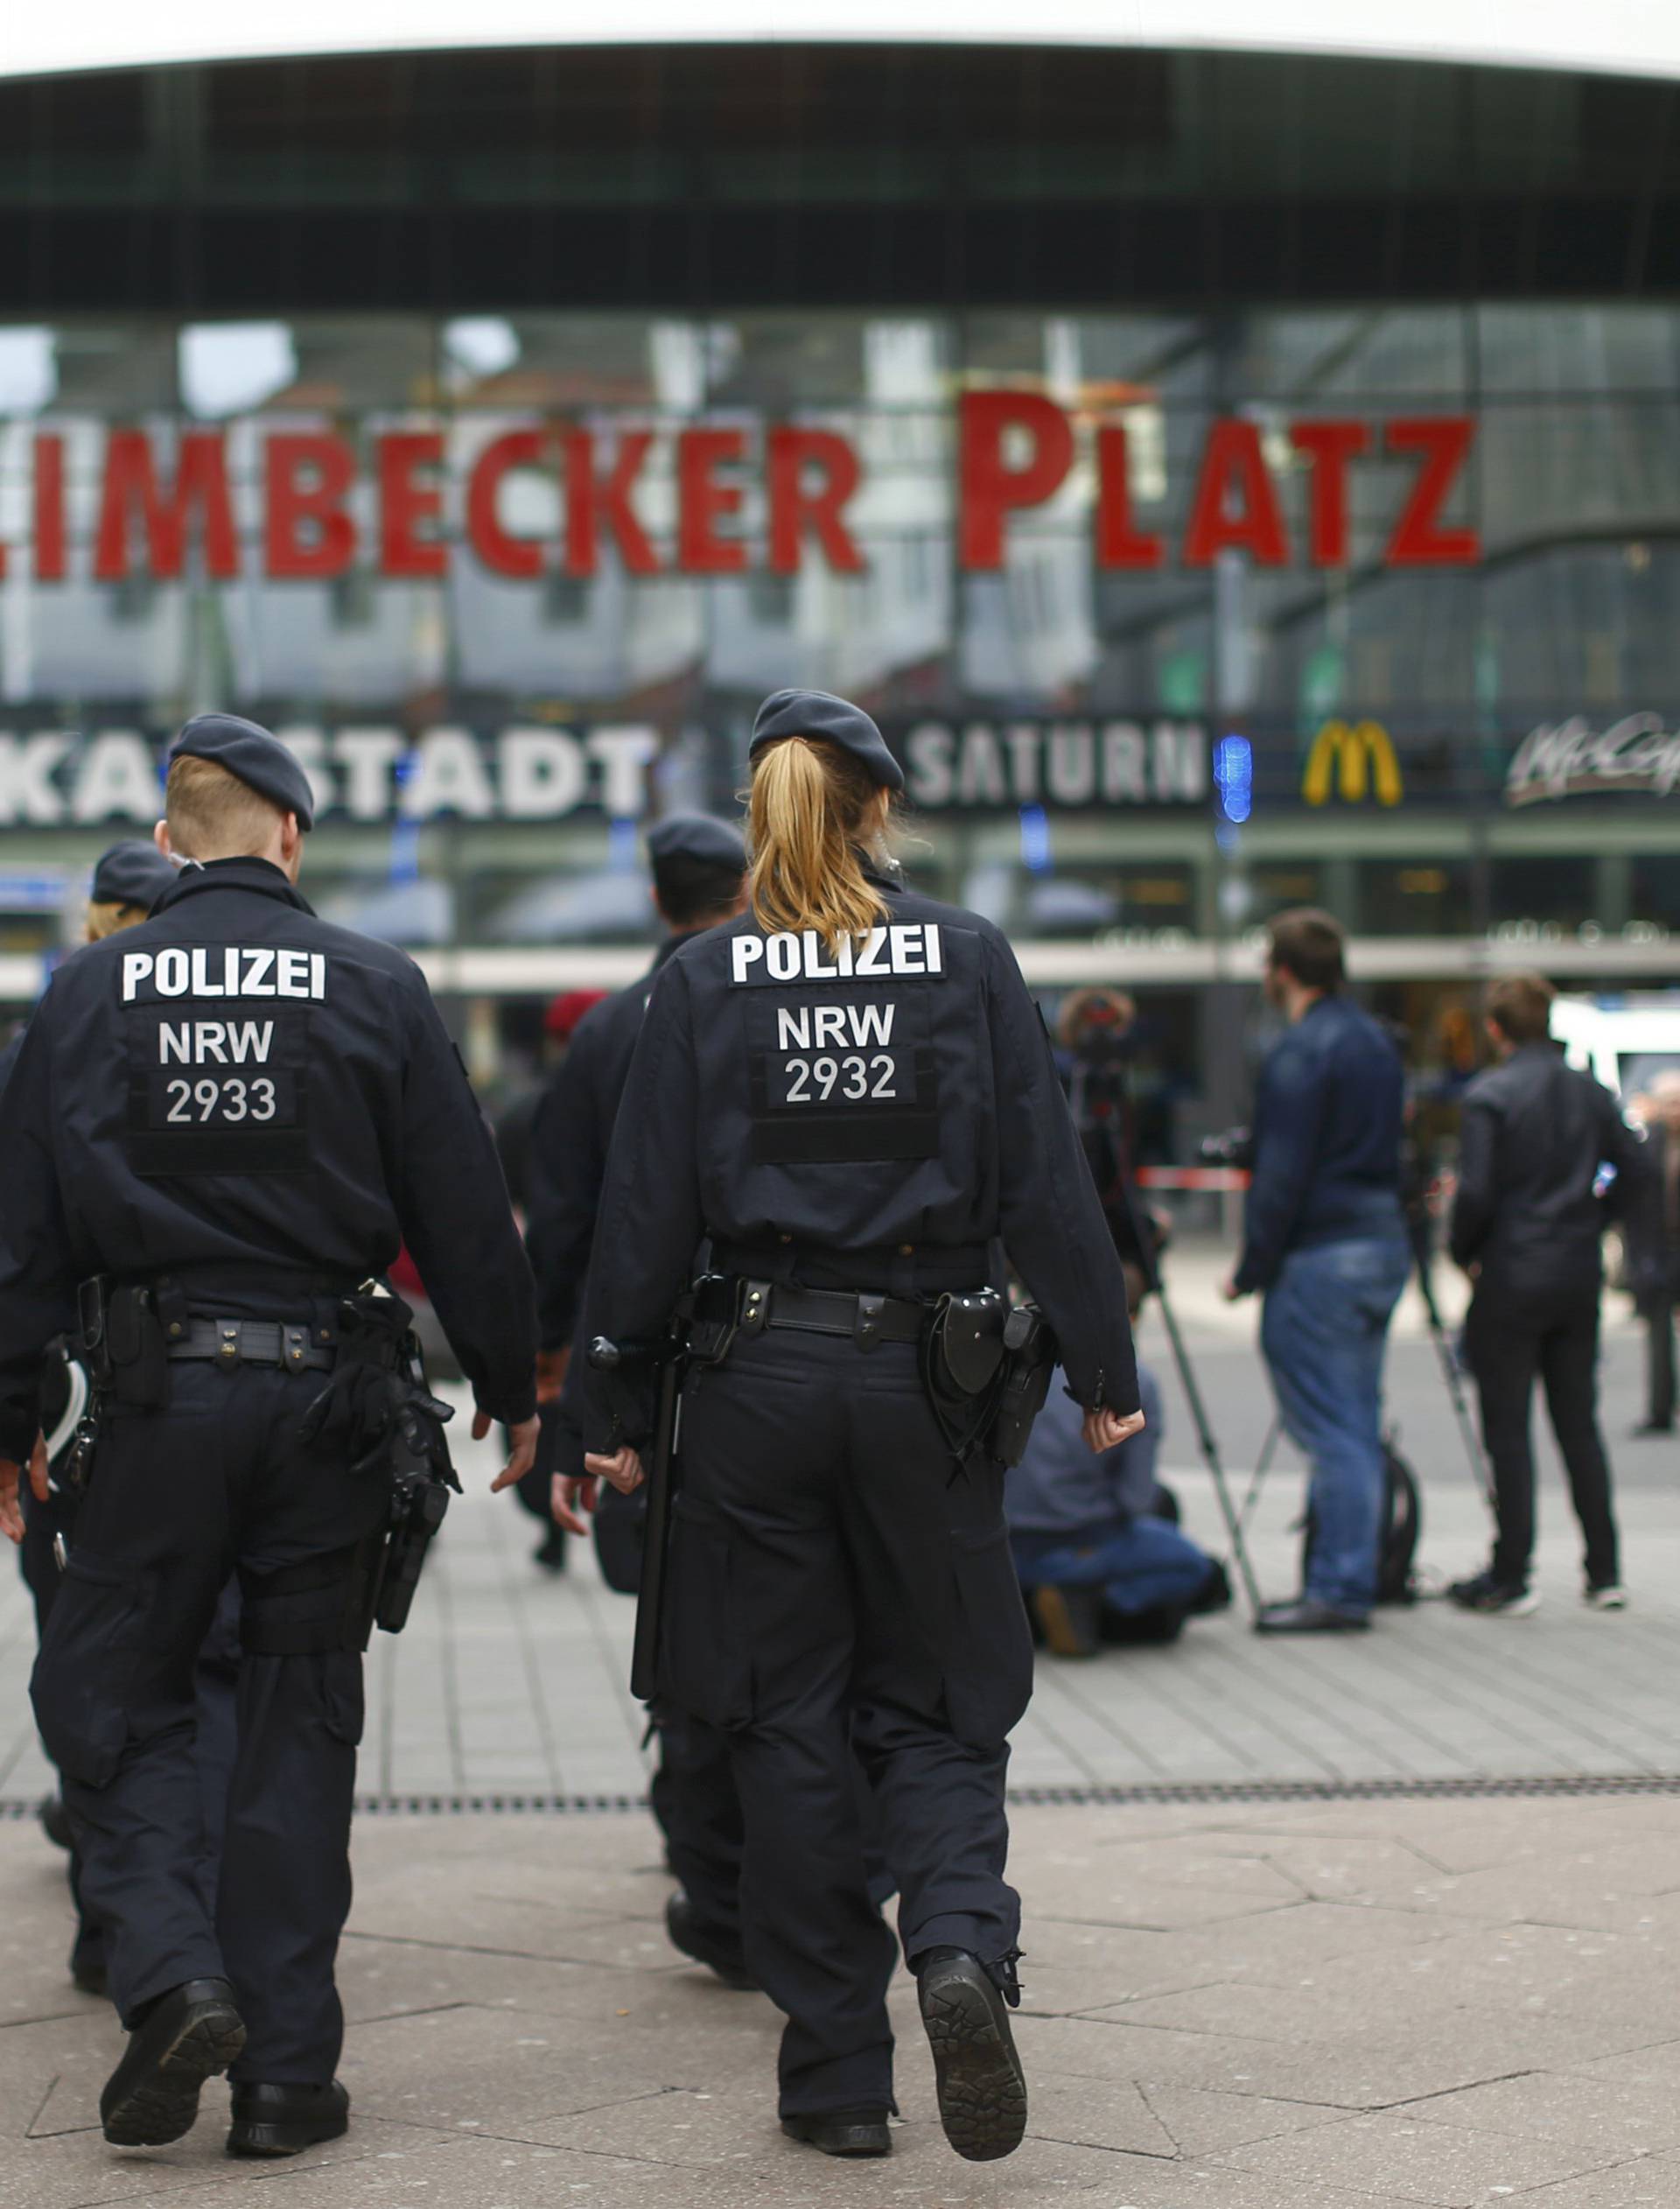 Police walks towards the Limbecker Platz shopping mall in Essen